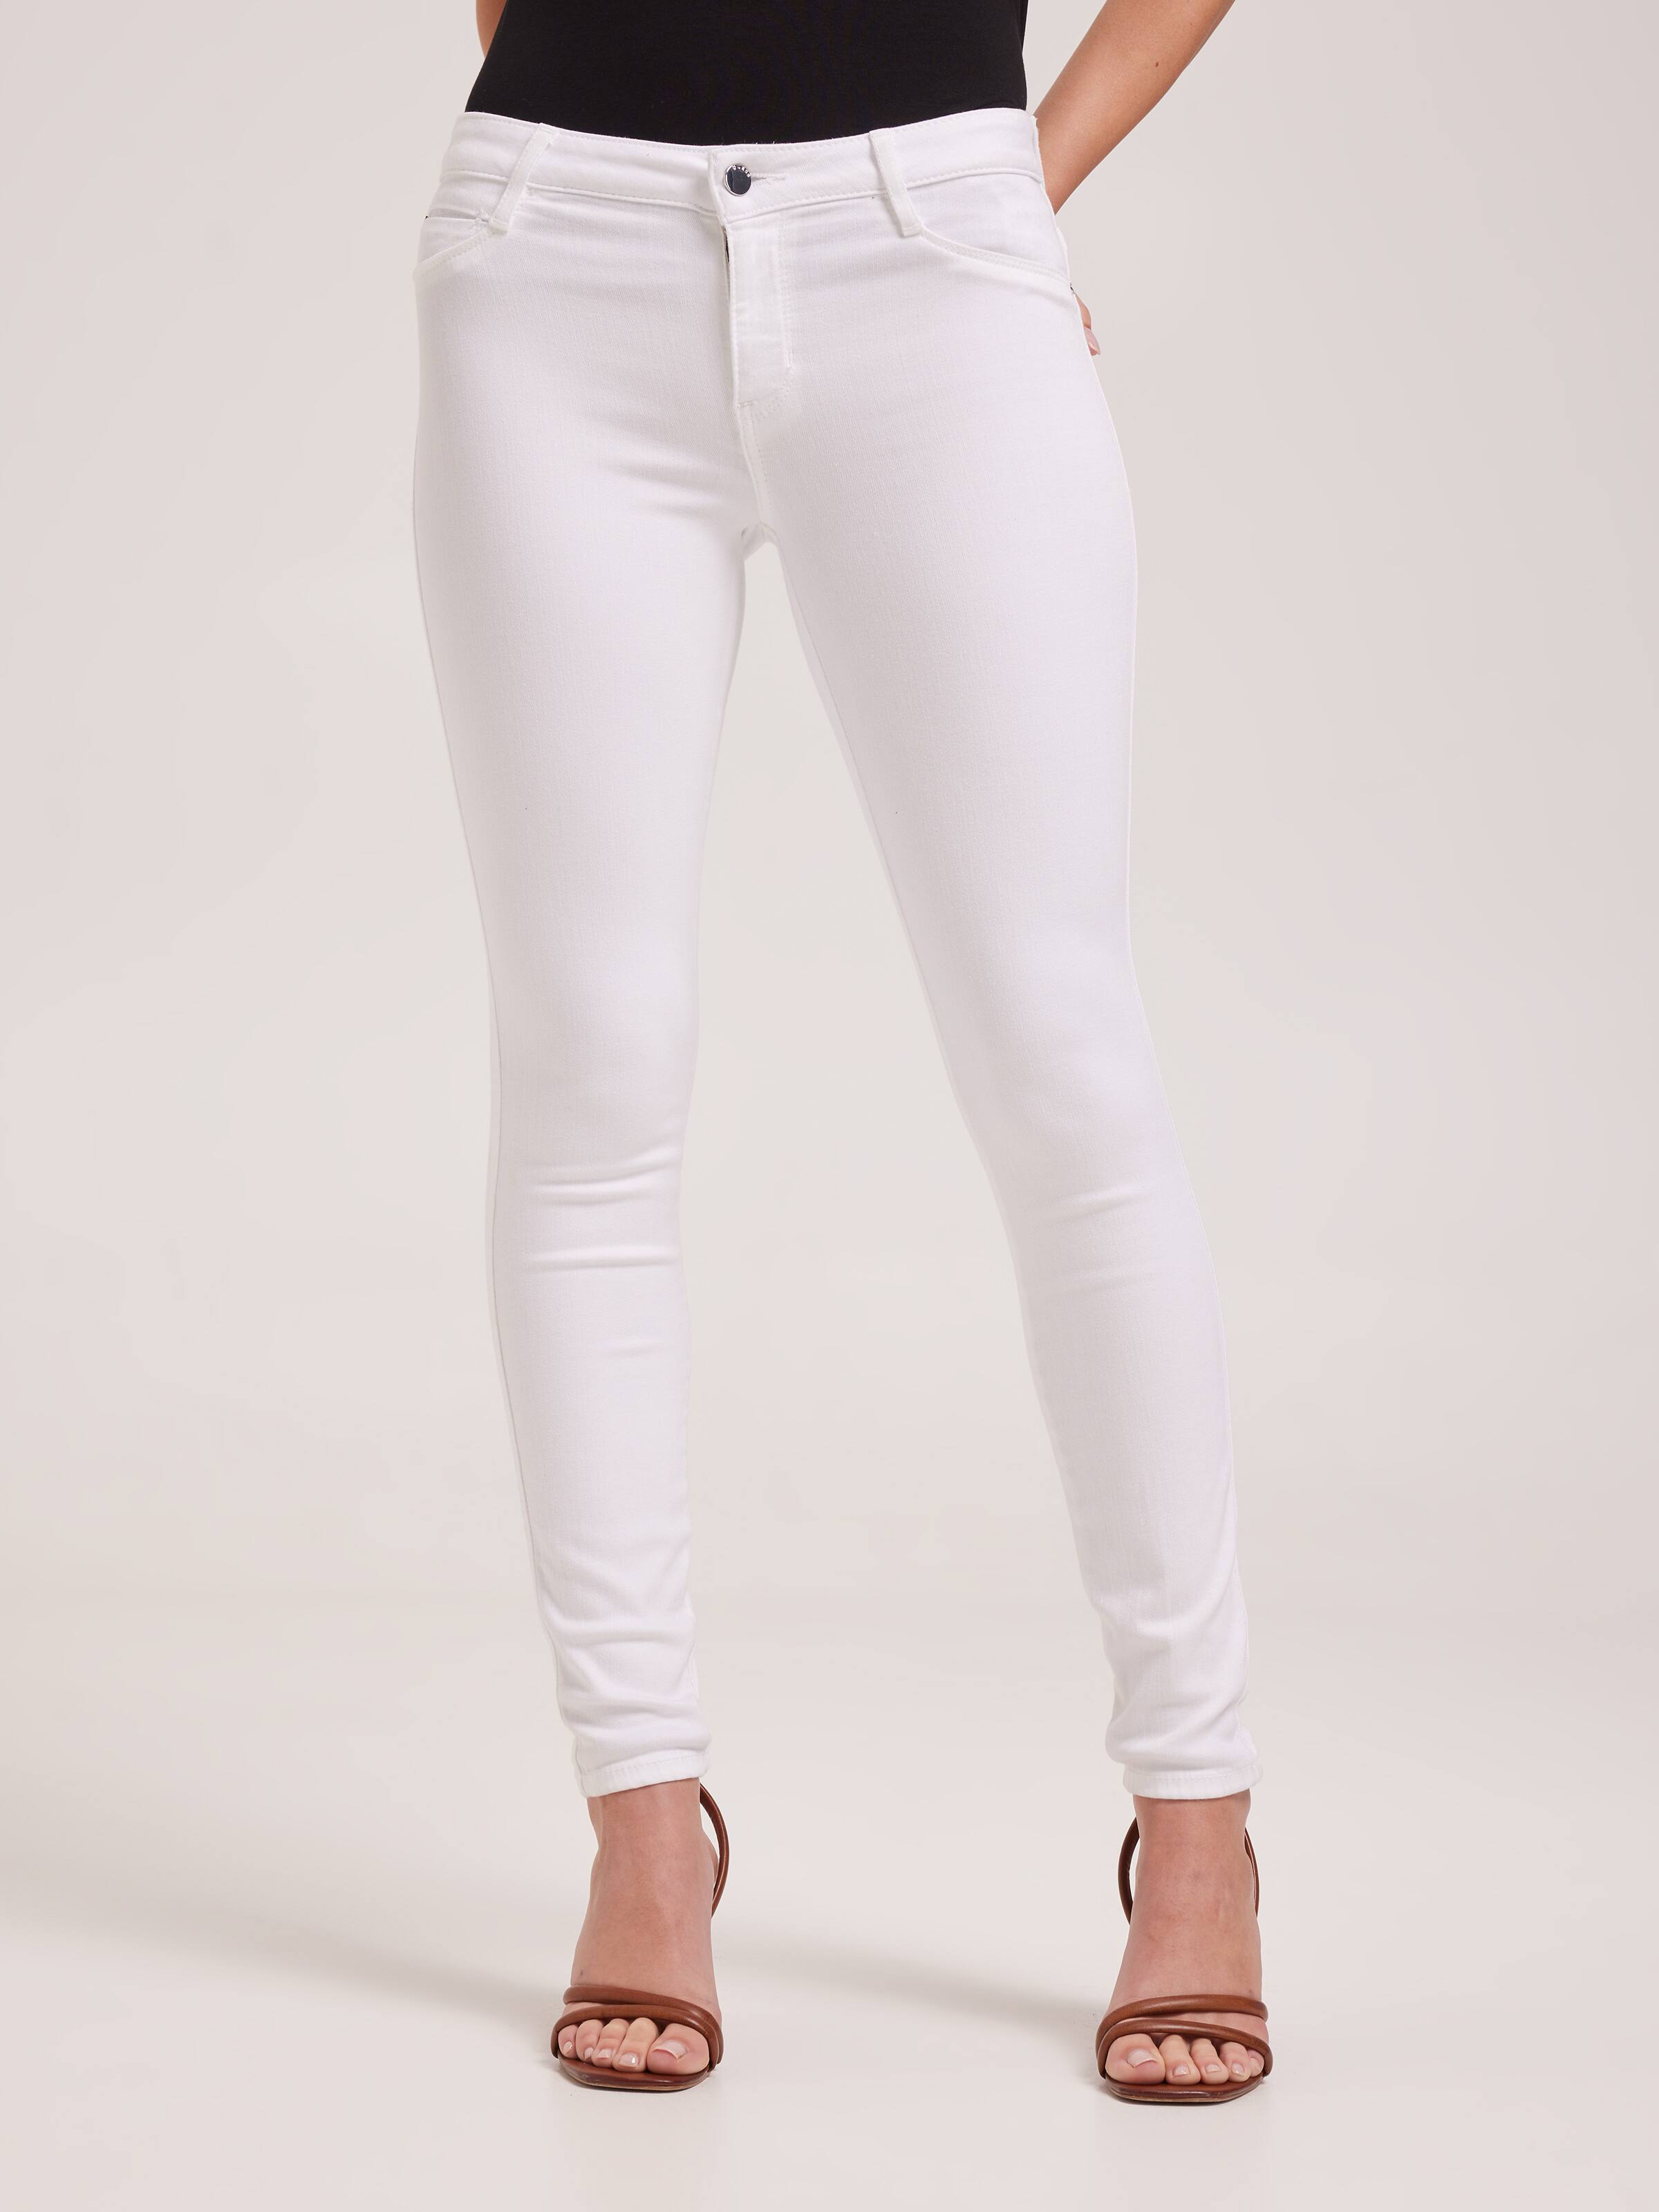 Sexy Skinny Curvy Jean In White